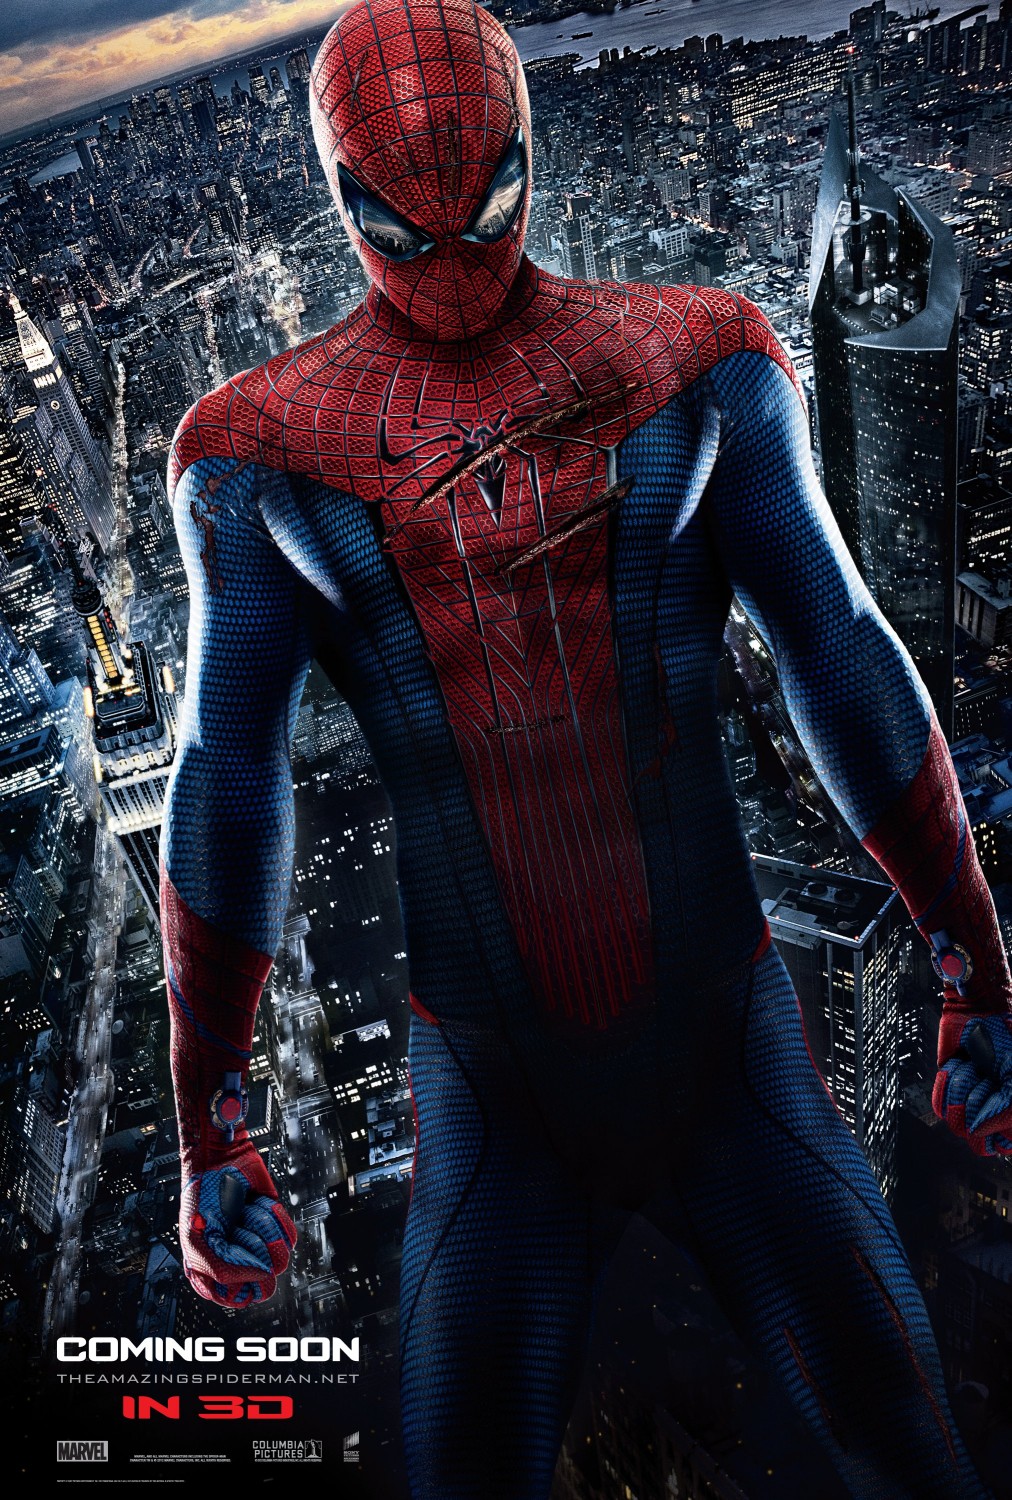 full hd 1080p movies blu-ray hindi The Amazing Spider - Man